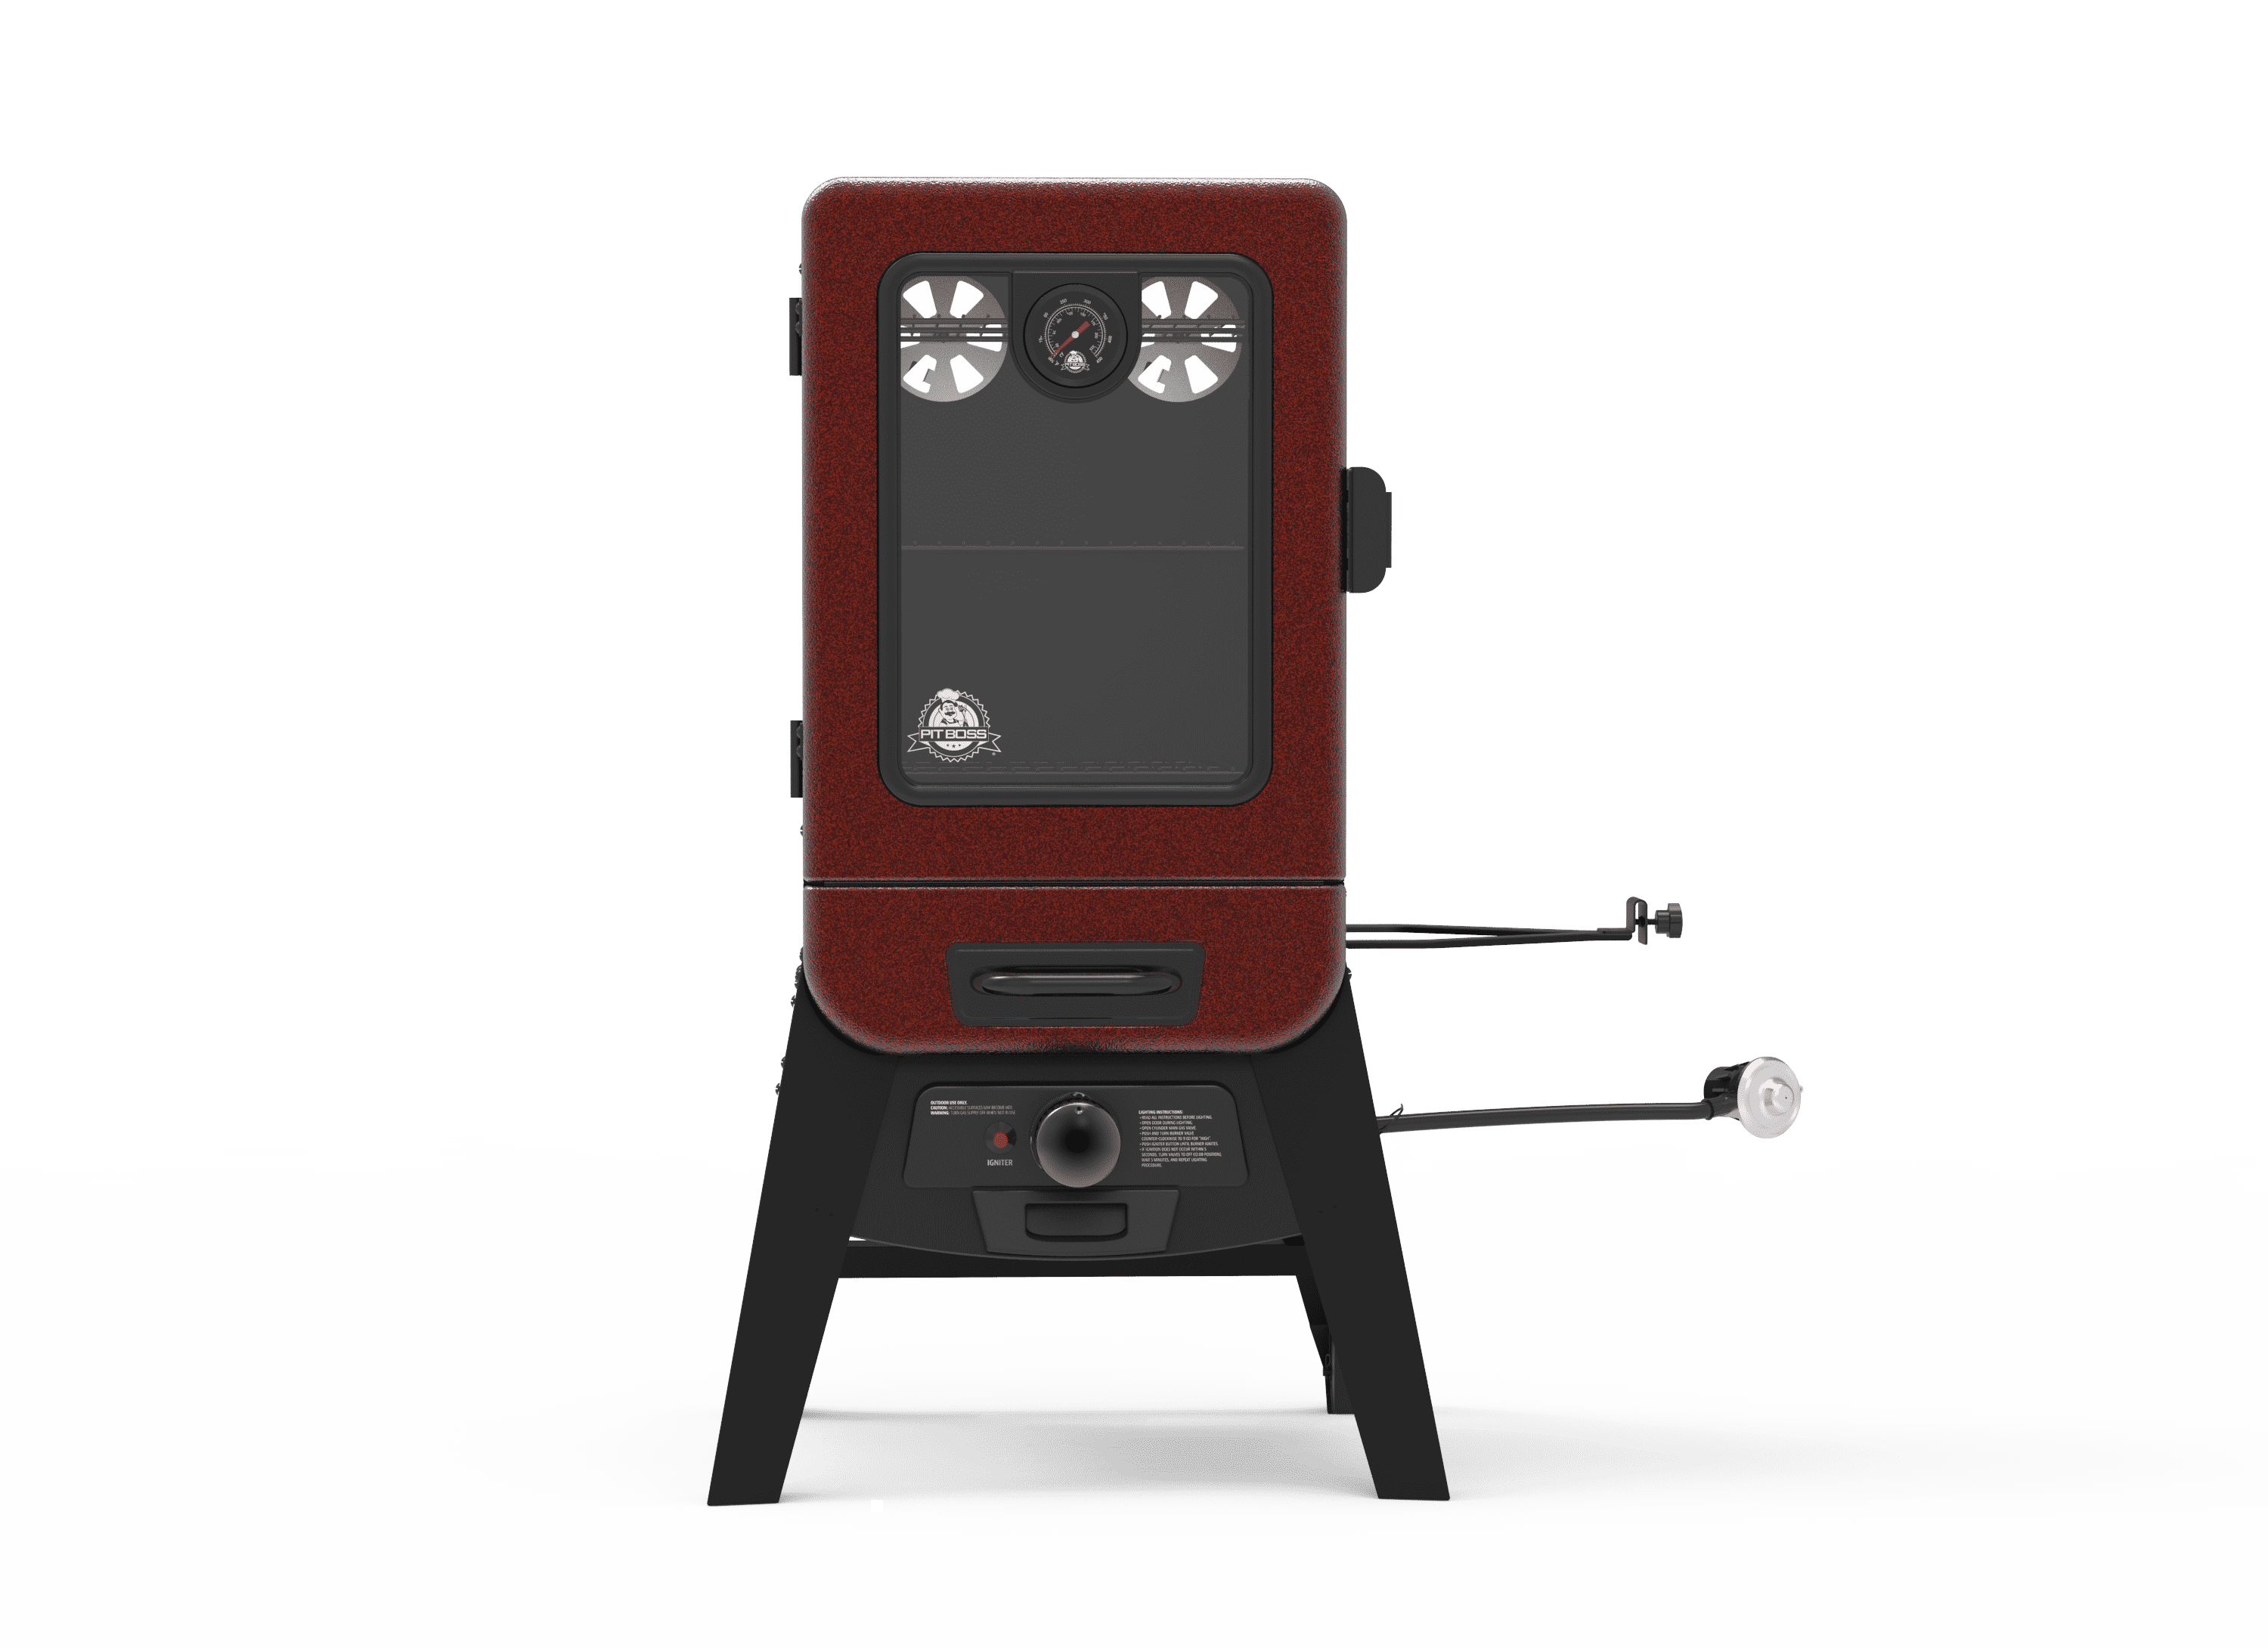 Pirecart Vertical Propane Portable 225 Square Inches Smoker & Grill